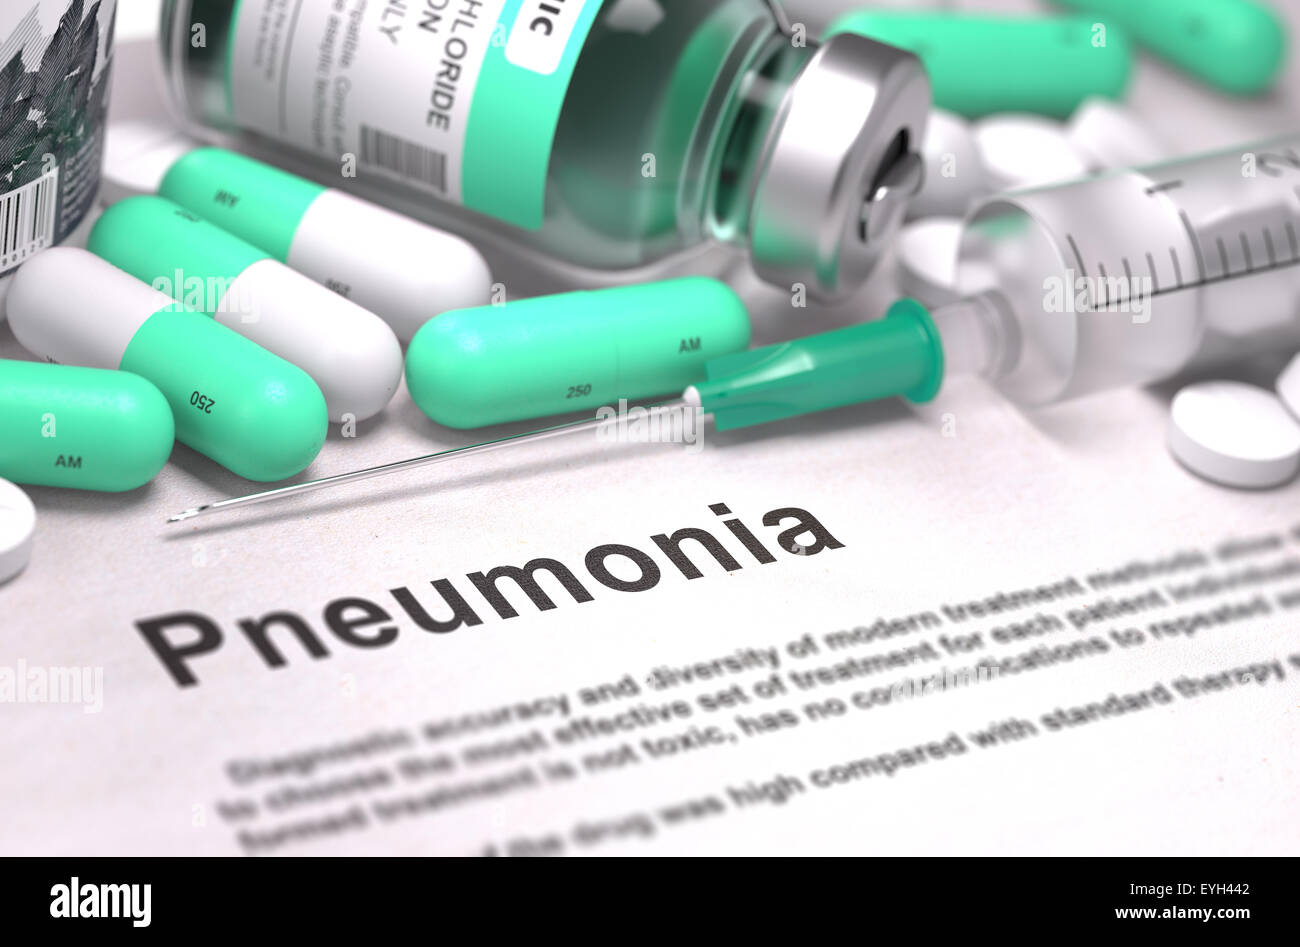 Pneumonia Diagnosis. Medical Concept. Composition of Medicaments. Stock Photo